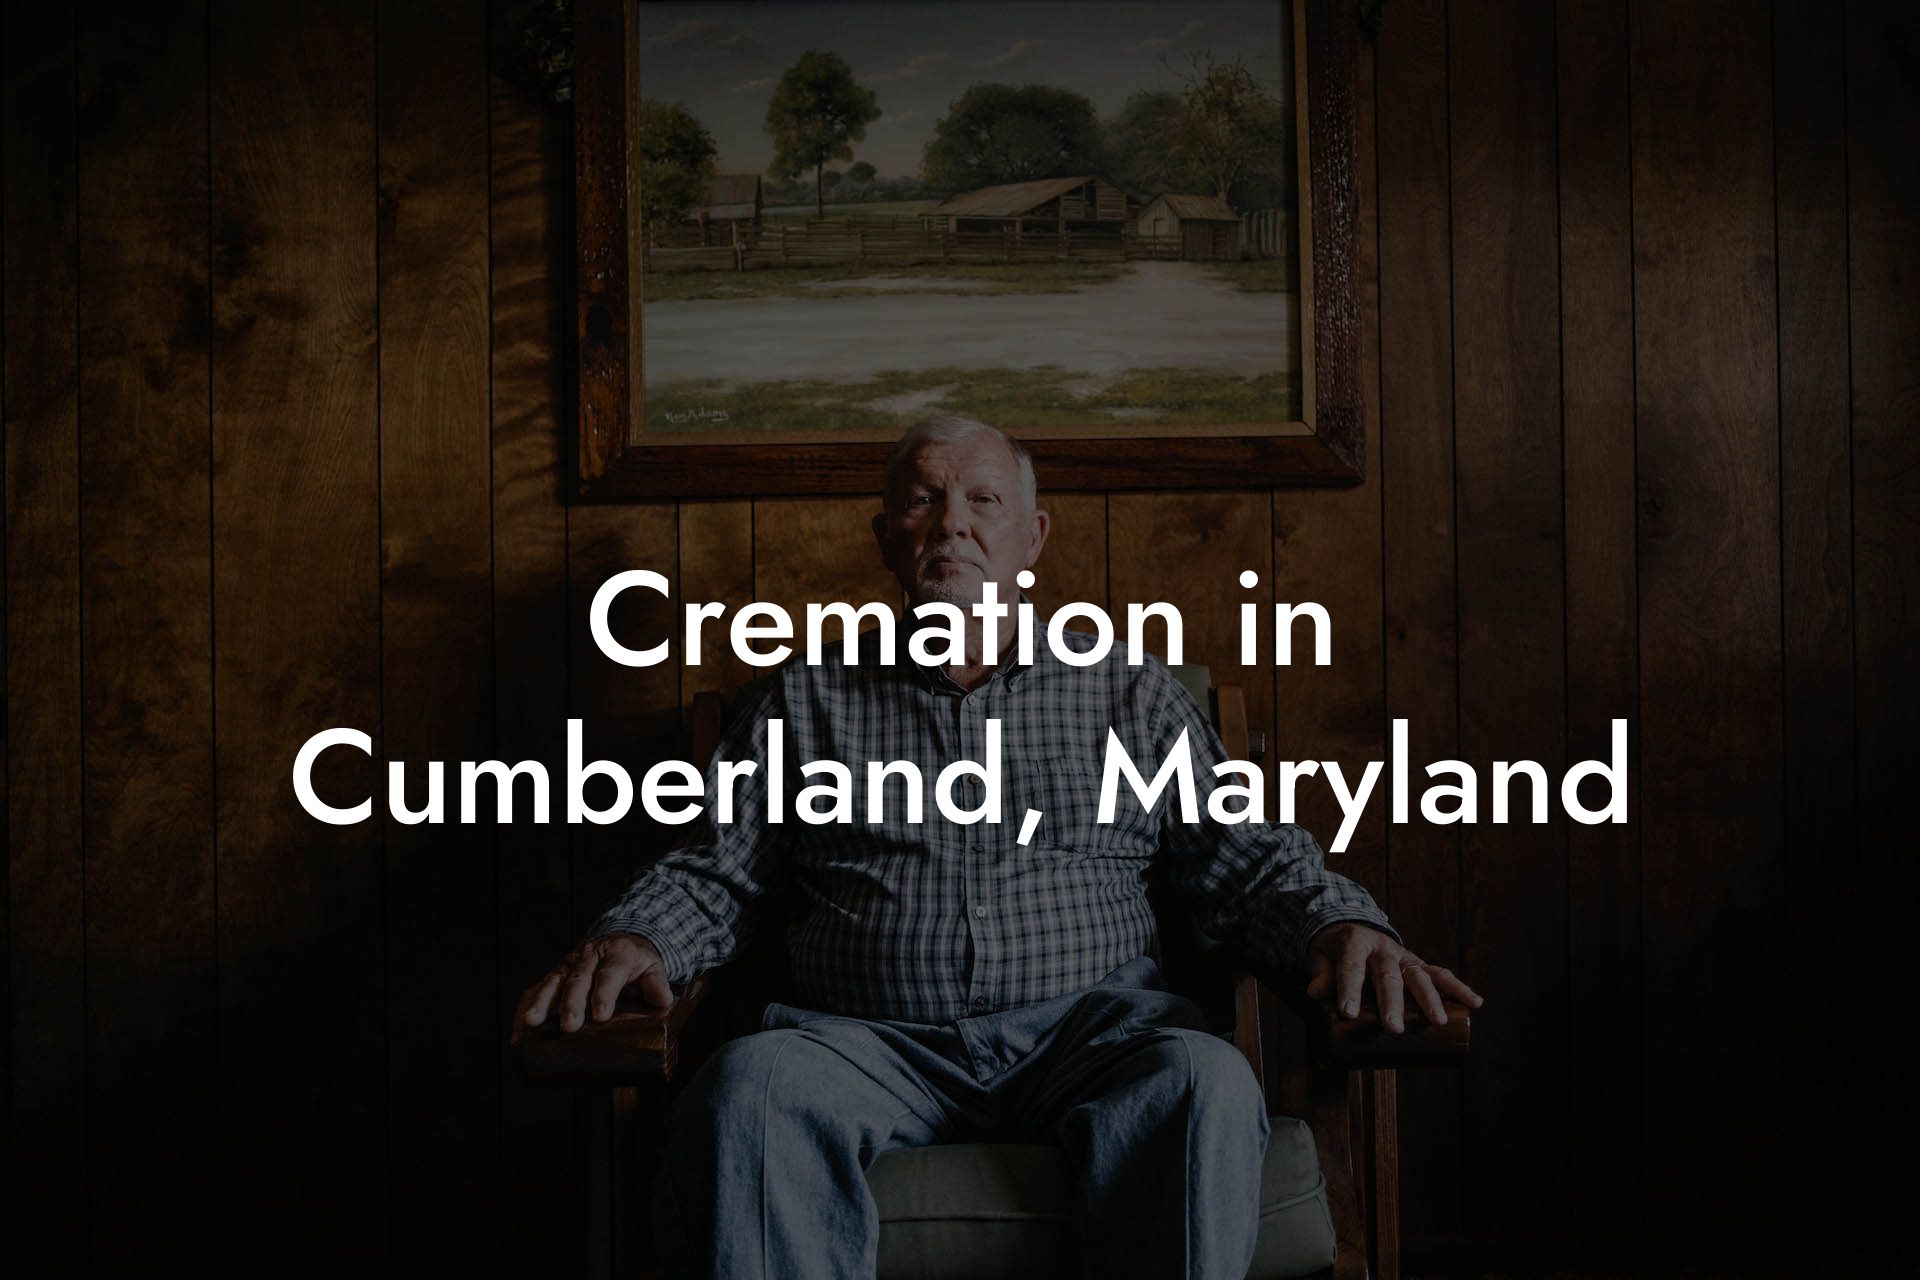 Cremation in Cumberland, Maryland